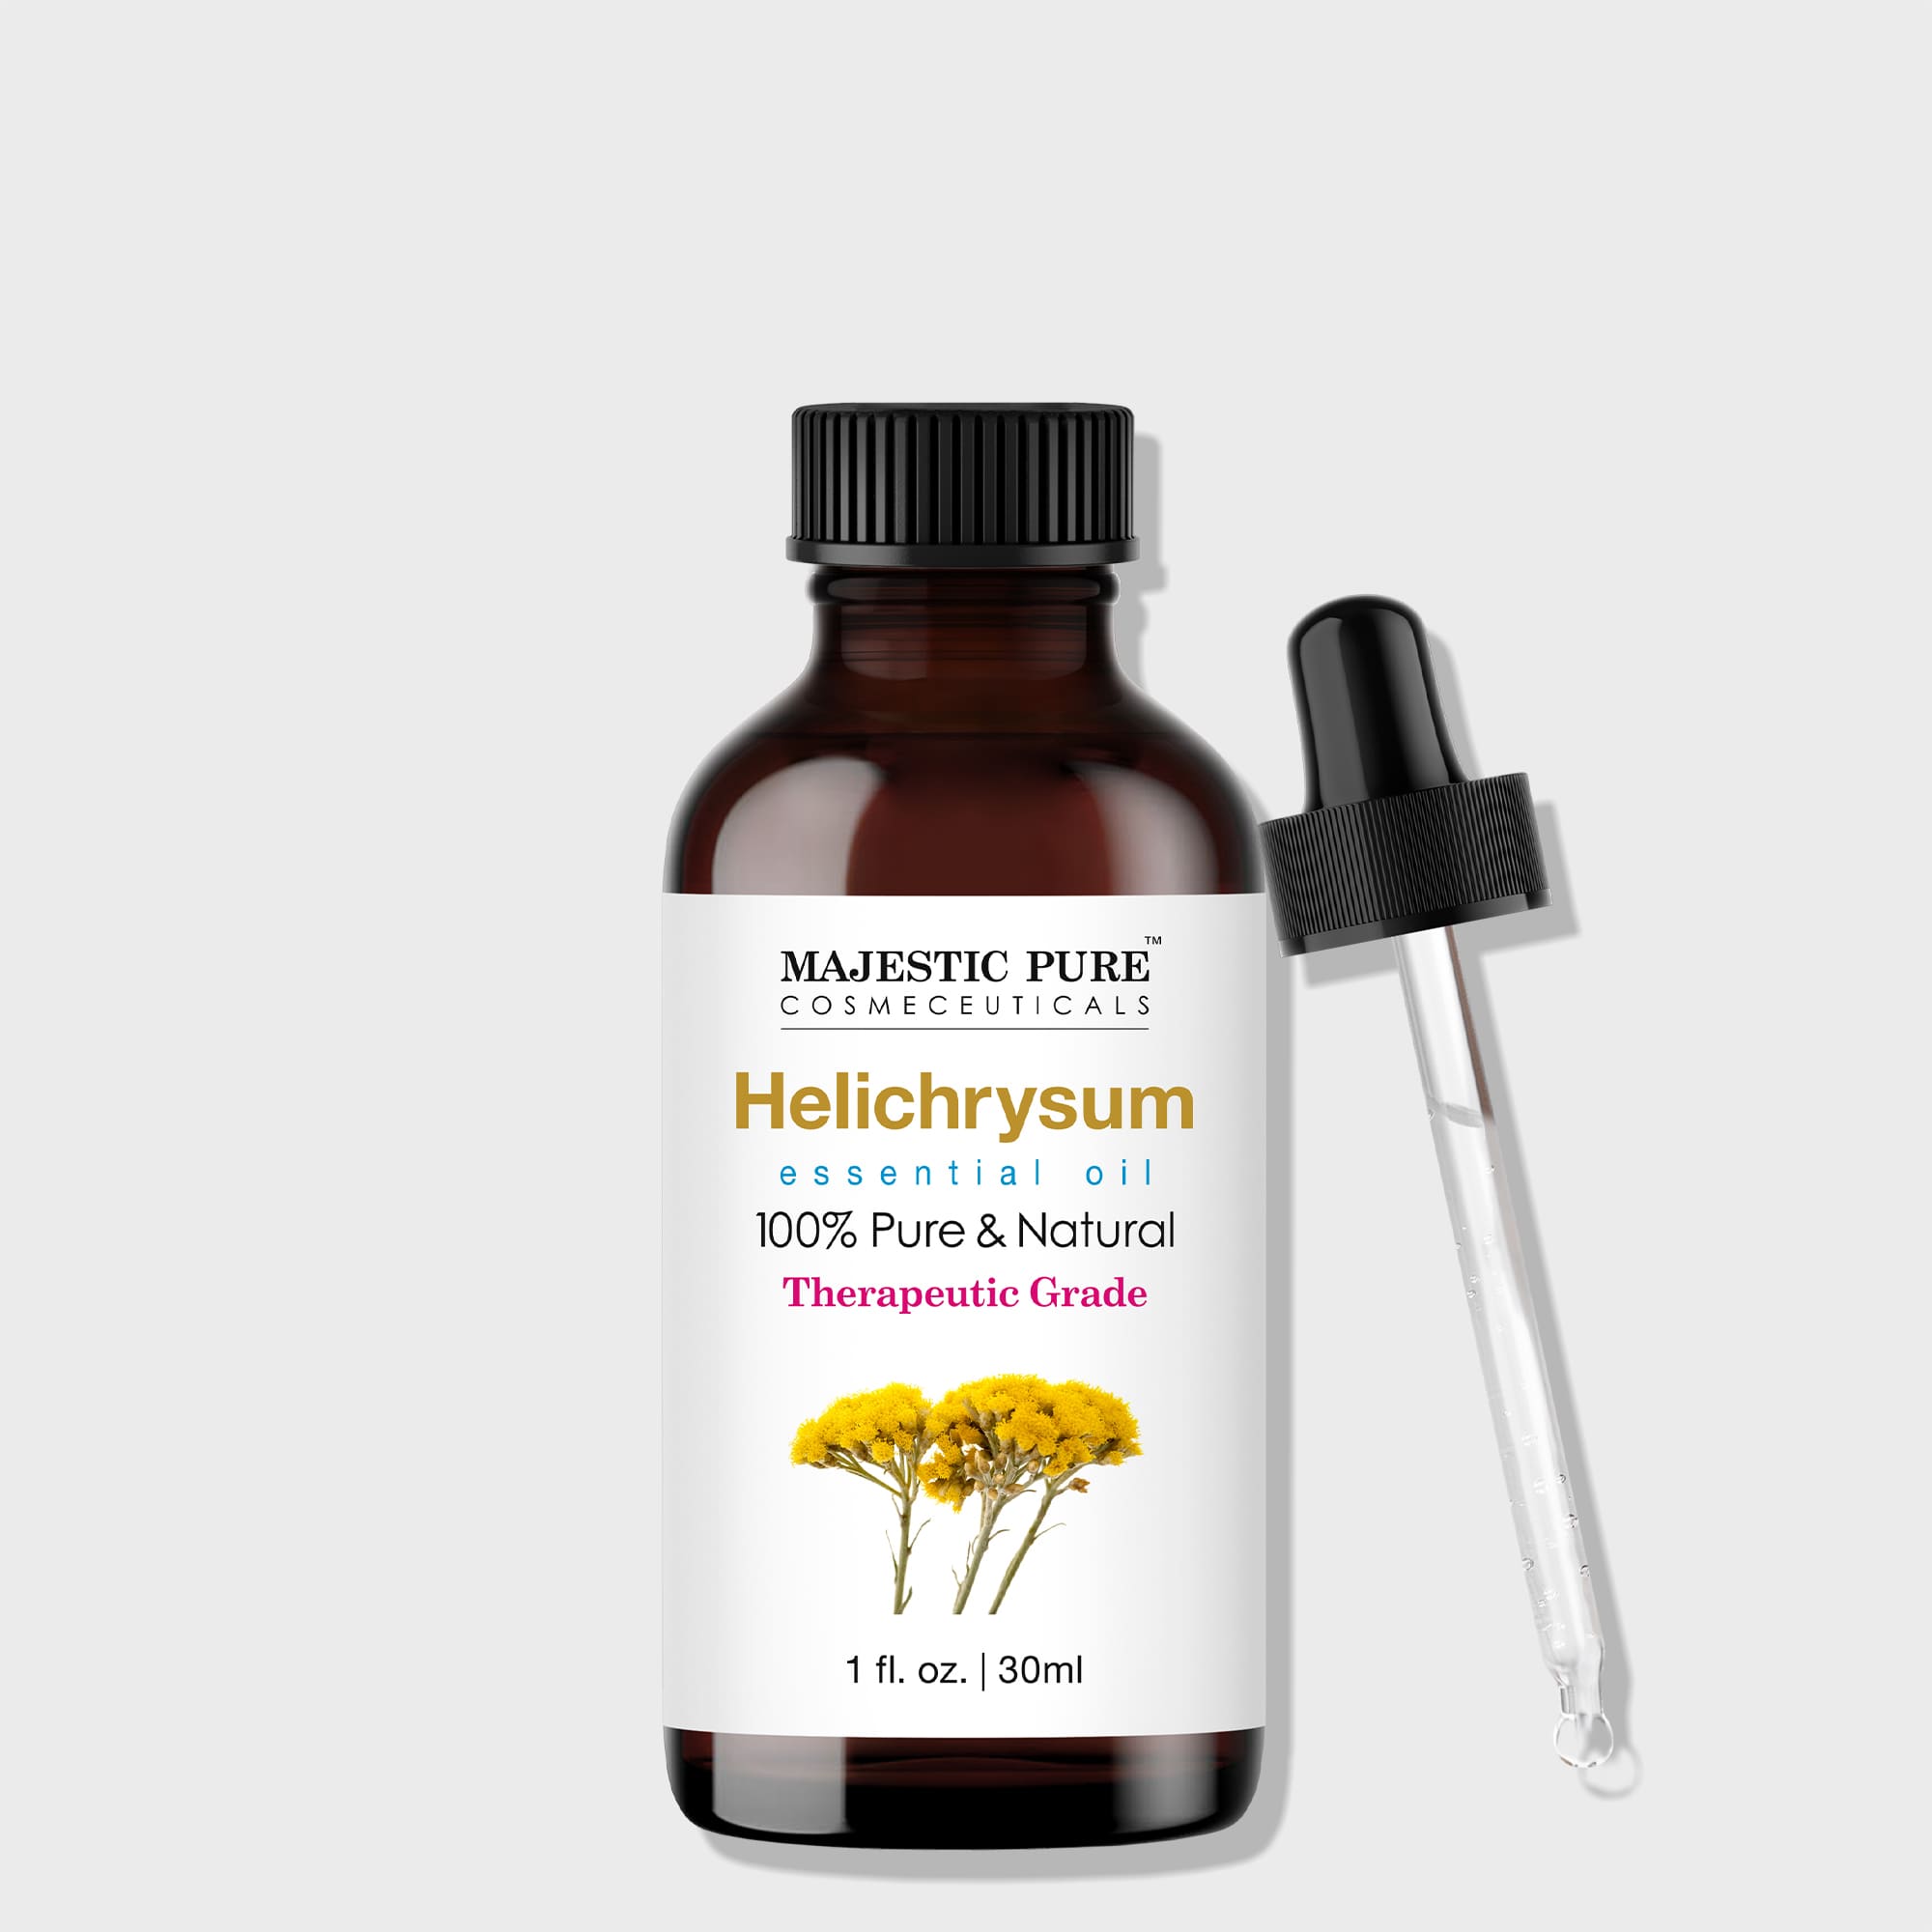 Majestic Pure Cosmeceuticals Helichrysum Essential Oil